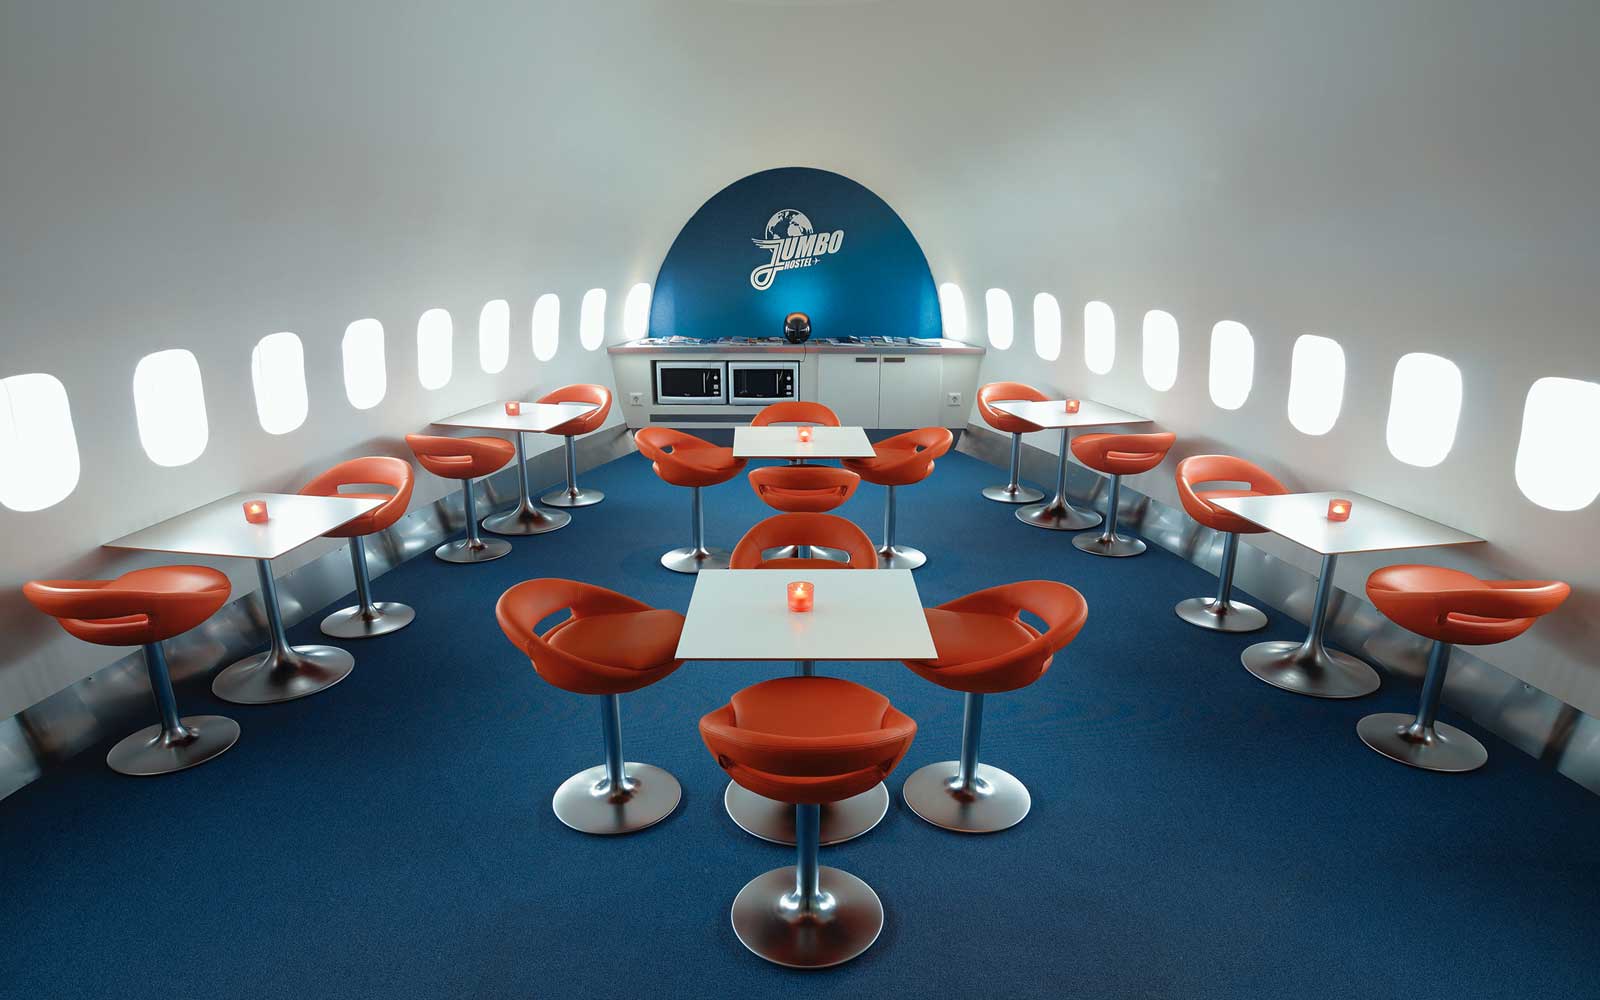 Boeing 747 airplane hotel – Vuing.com